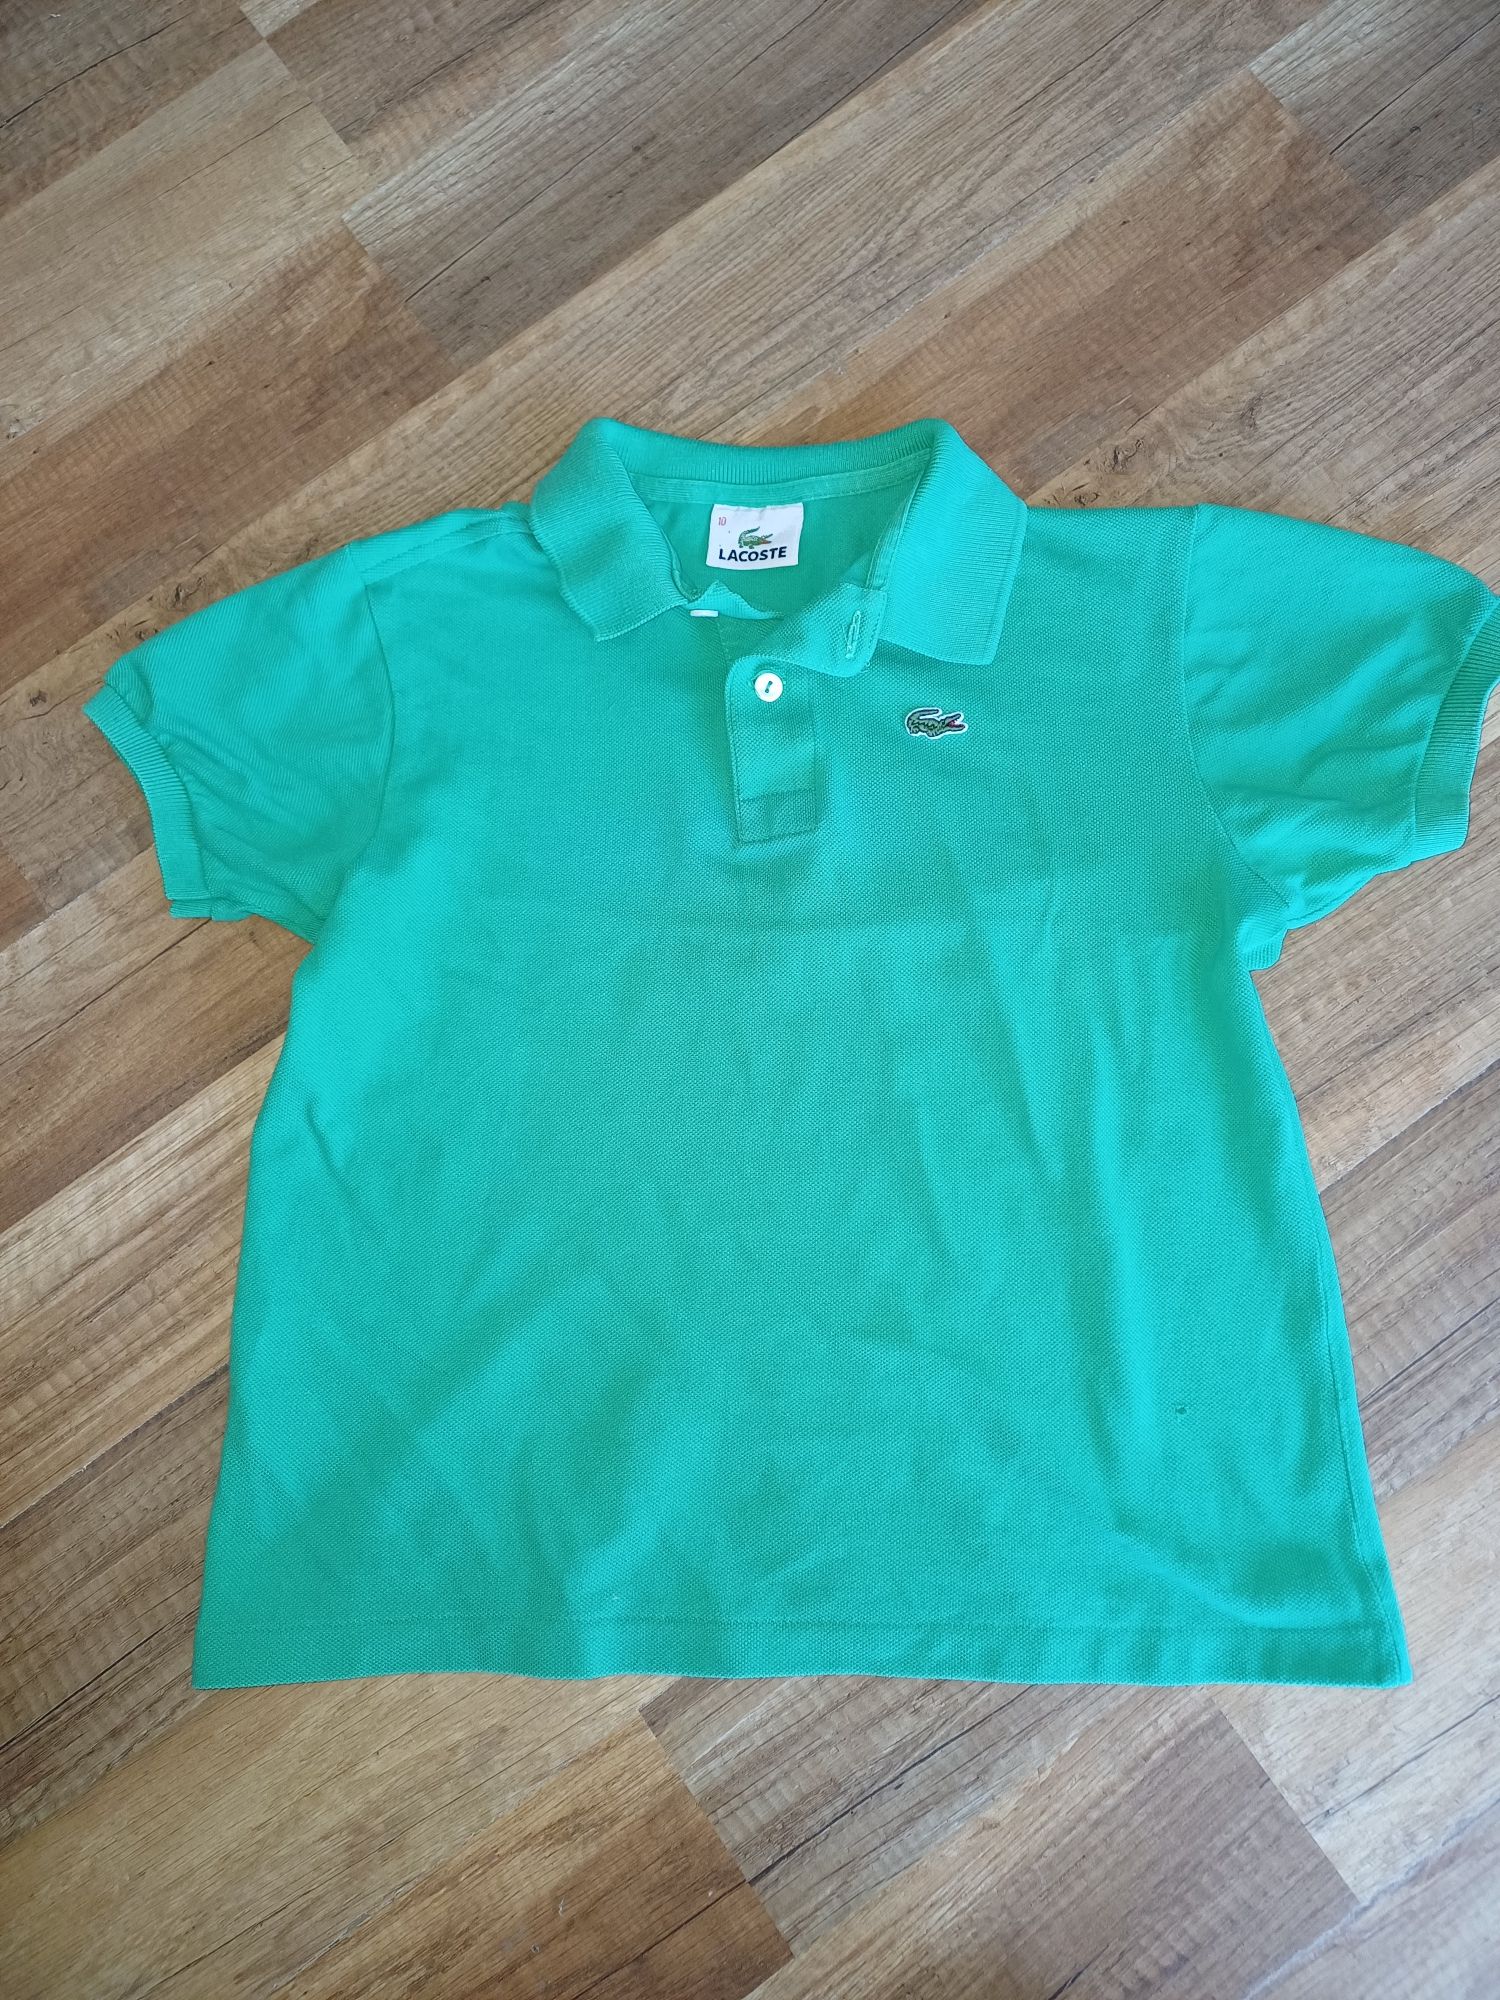 Lacoste 9 10 koszulka zielona t shirt 128 134 chłopiec